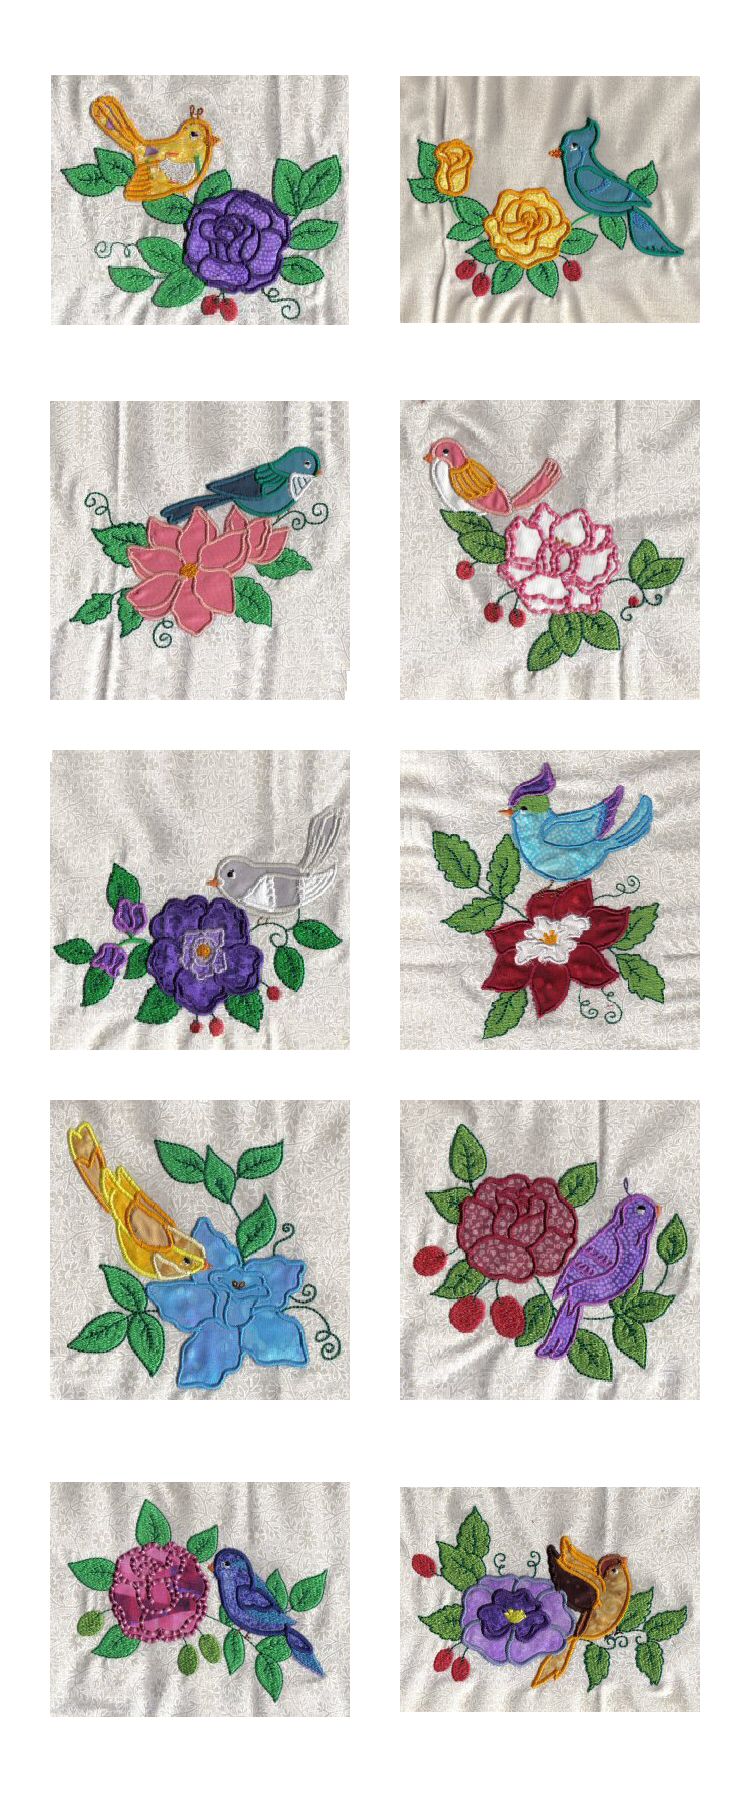 Applique Birds and Flowers Embroidery Machine Design Details